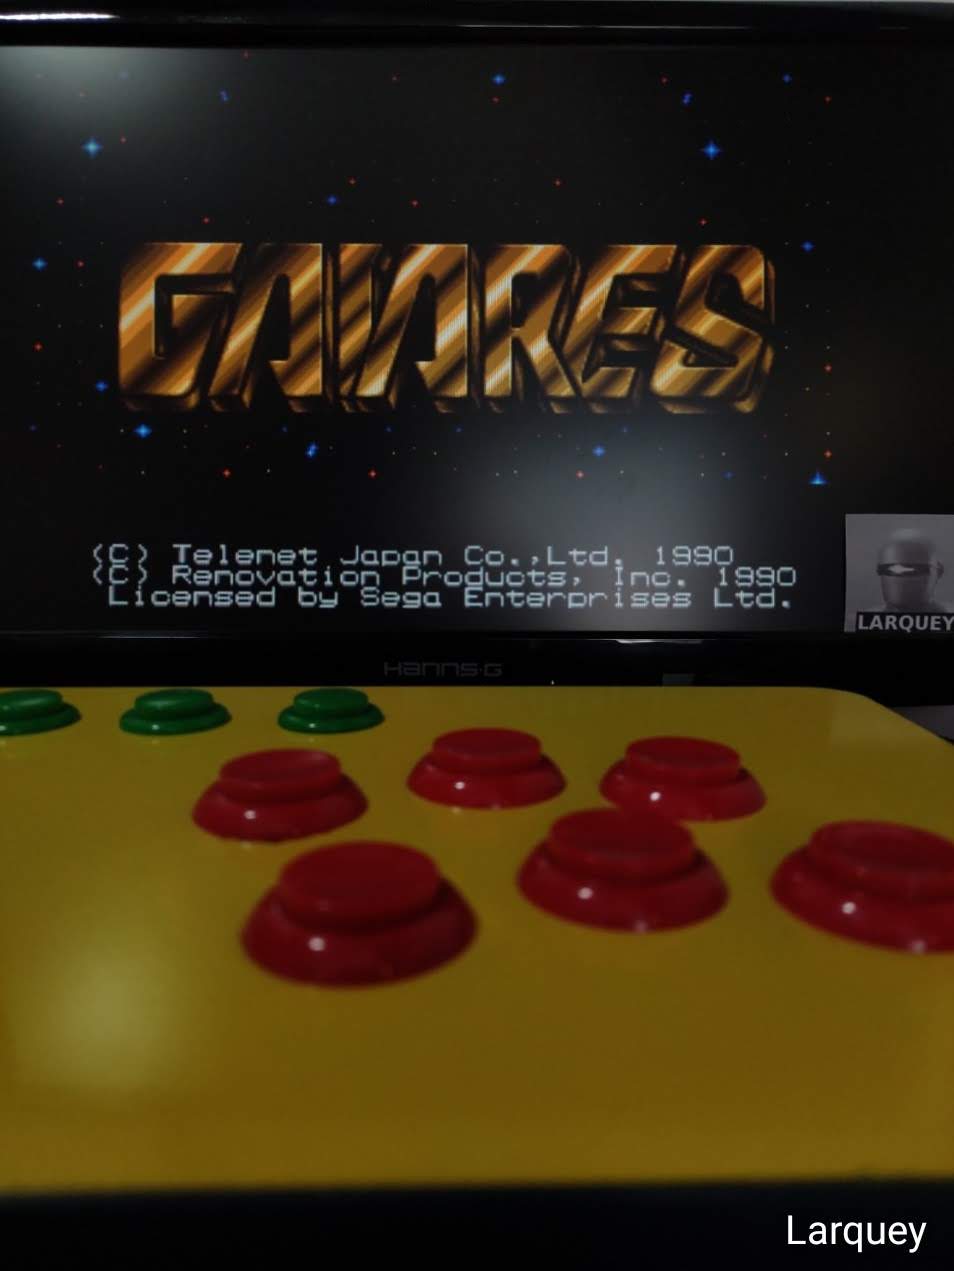 Larquey: Gaiares (Sega Genesis / MegaDrive Emulated) 47,275 points on 2021-09-25 04:16:04